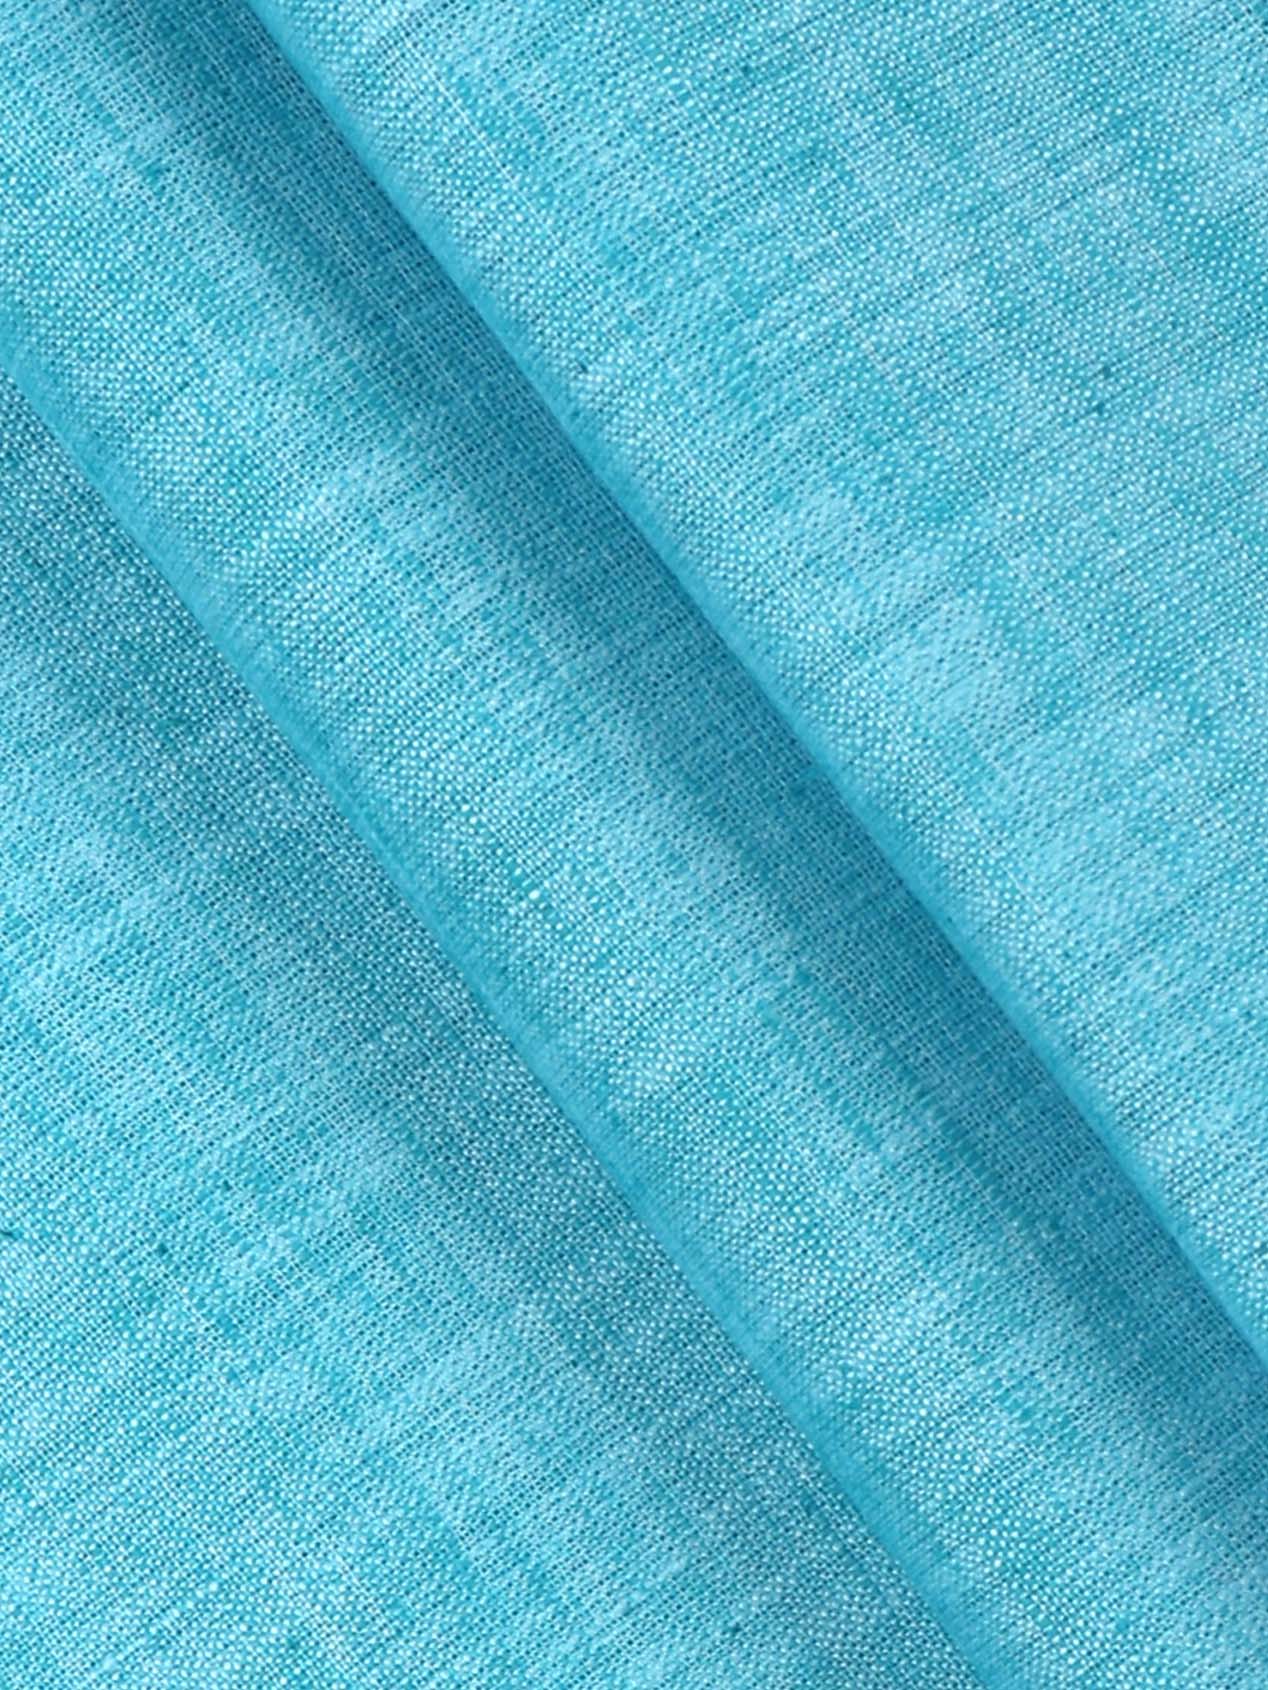 Cotton Blend Sky Blue Colour Kurtha Fabric Lampus - APC1106-30